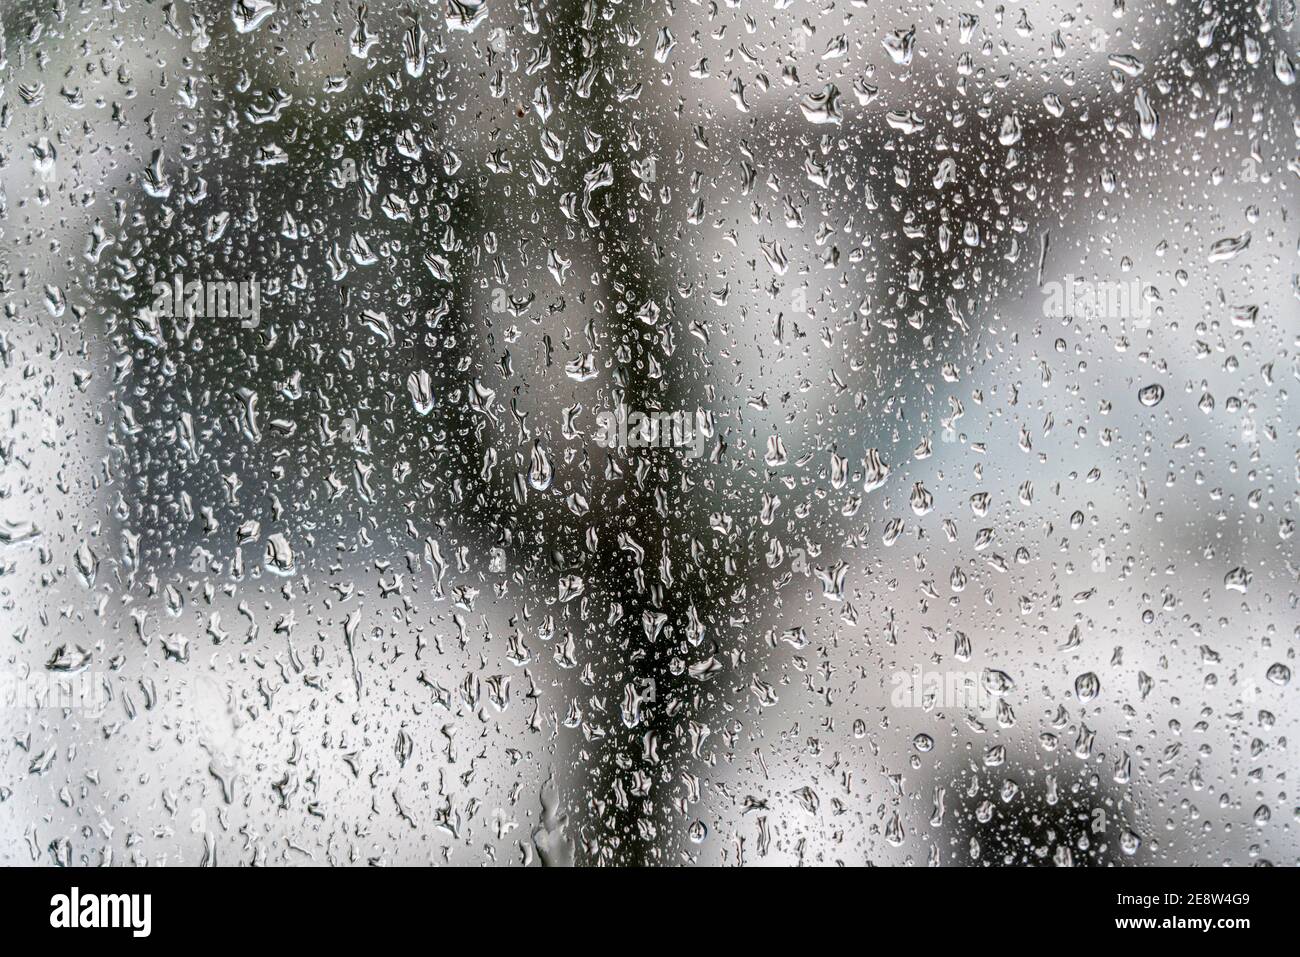 Rainy weather, raindrops on a window pane, Stock Photo